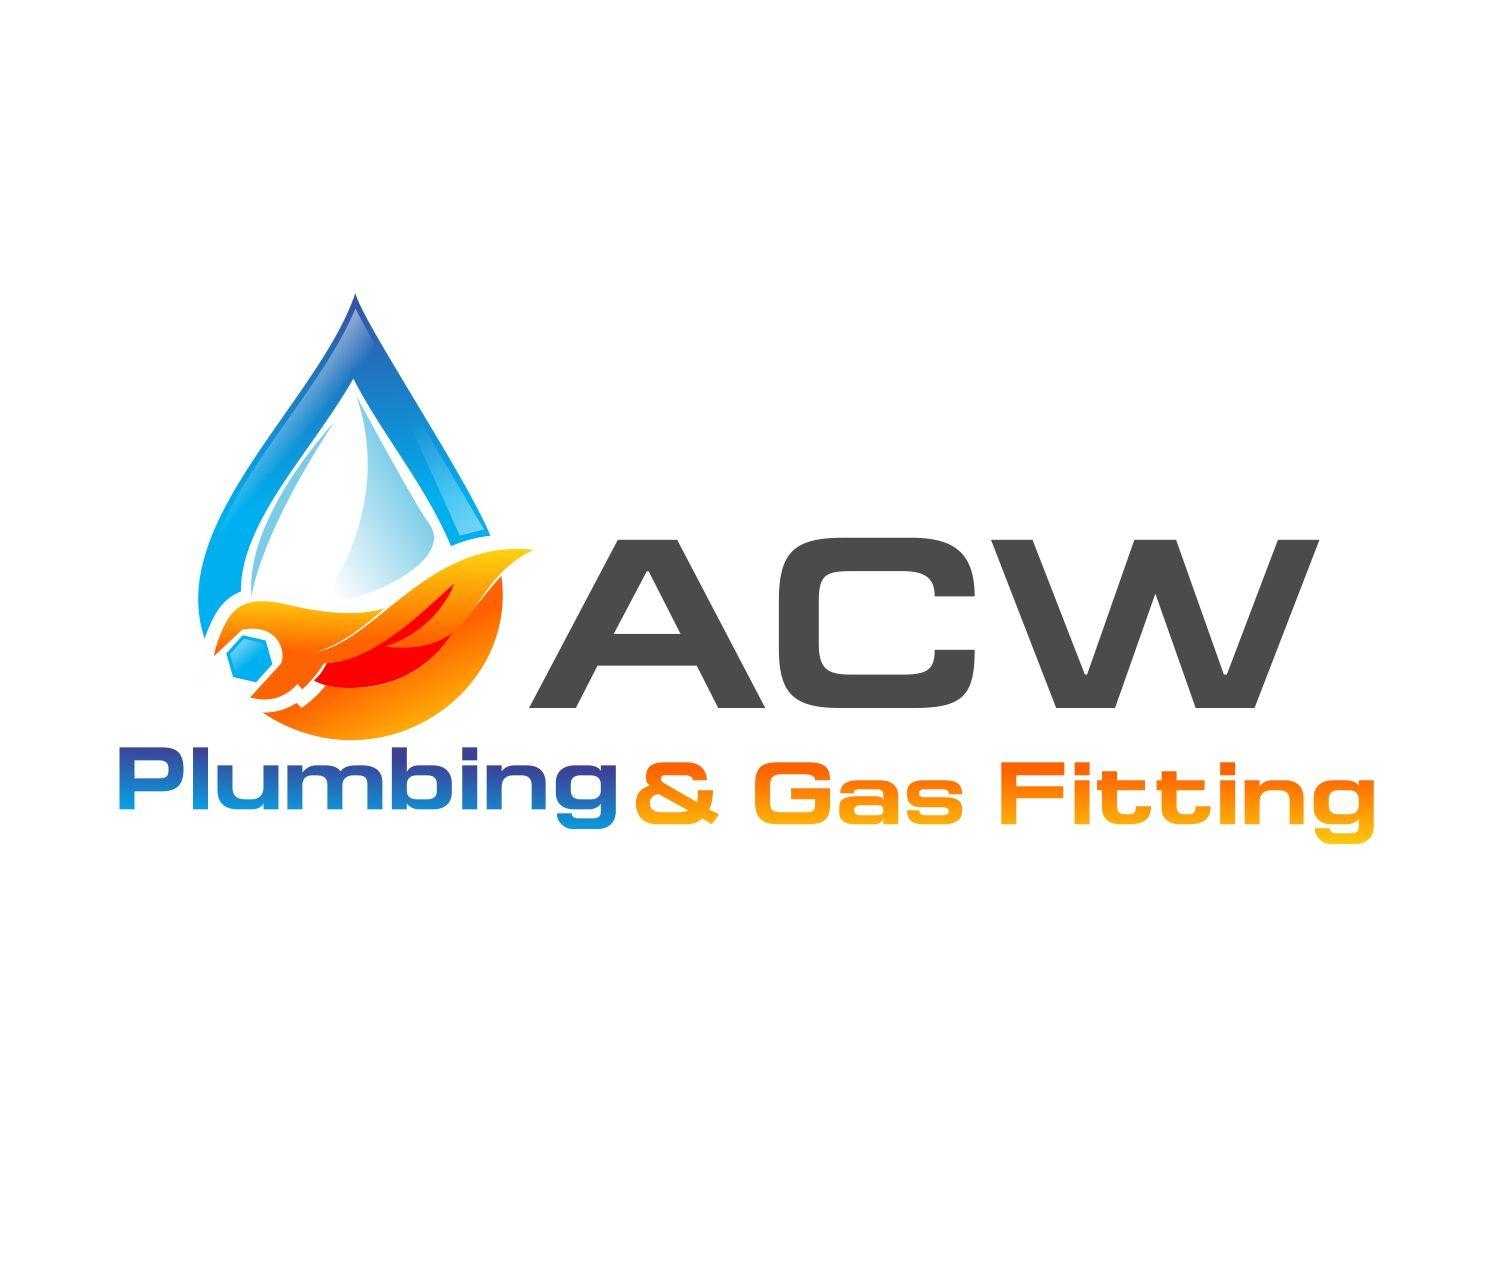 ACW Logo - Professional, Masculine, Plumbing Logo Design for ACW Plumbing & Gas